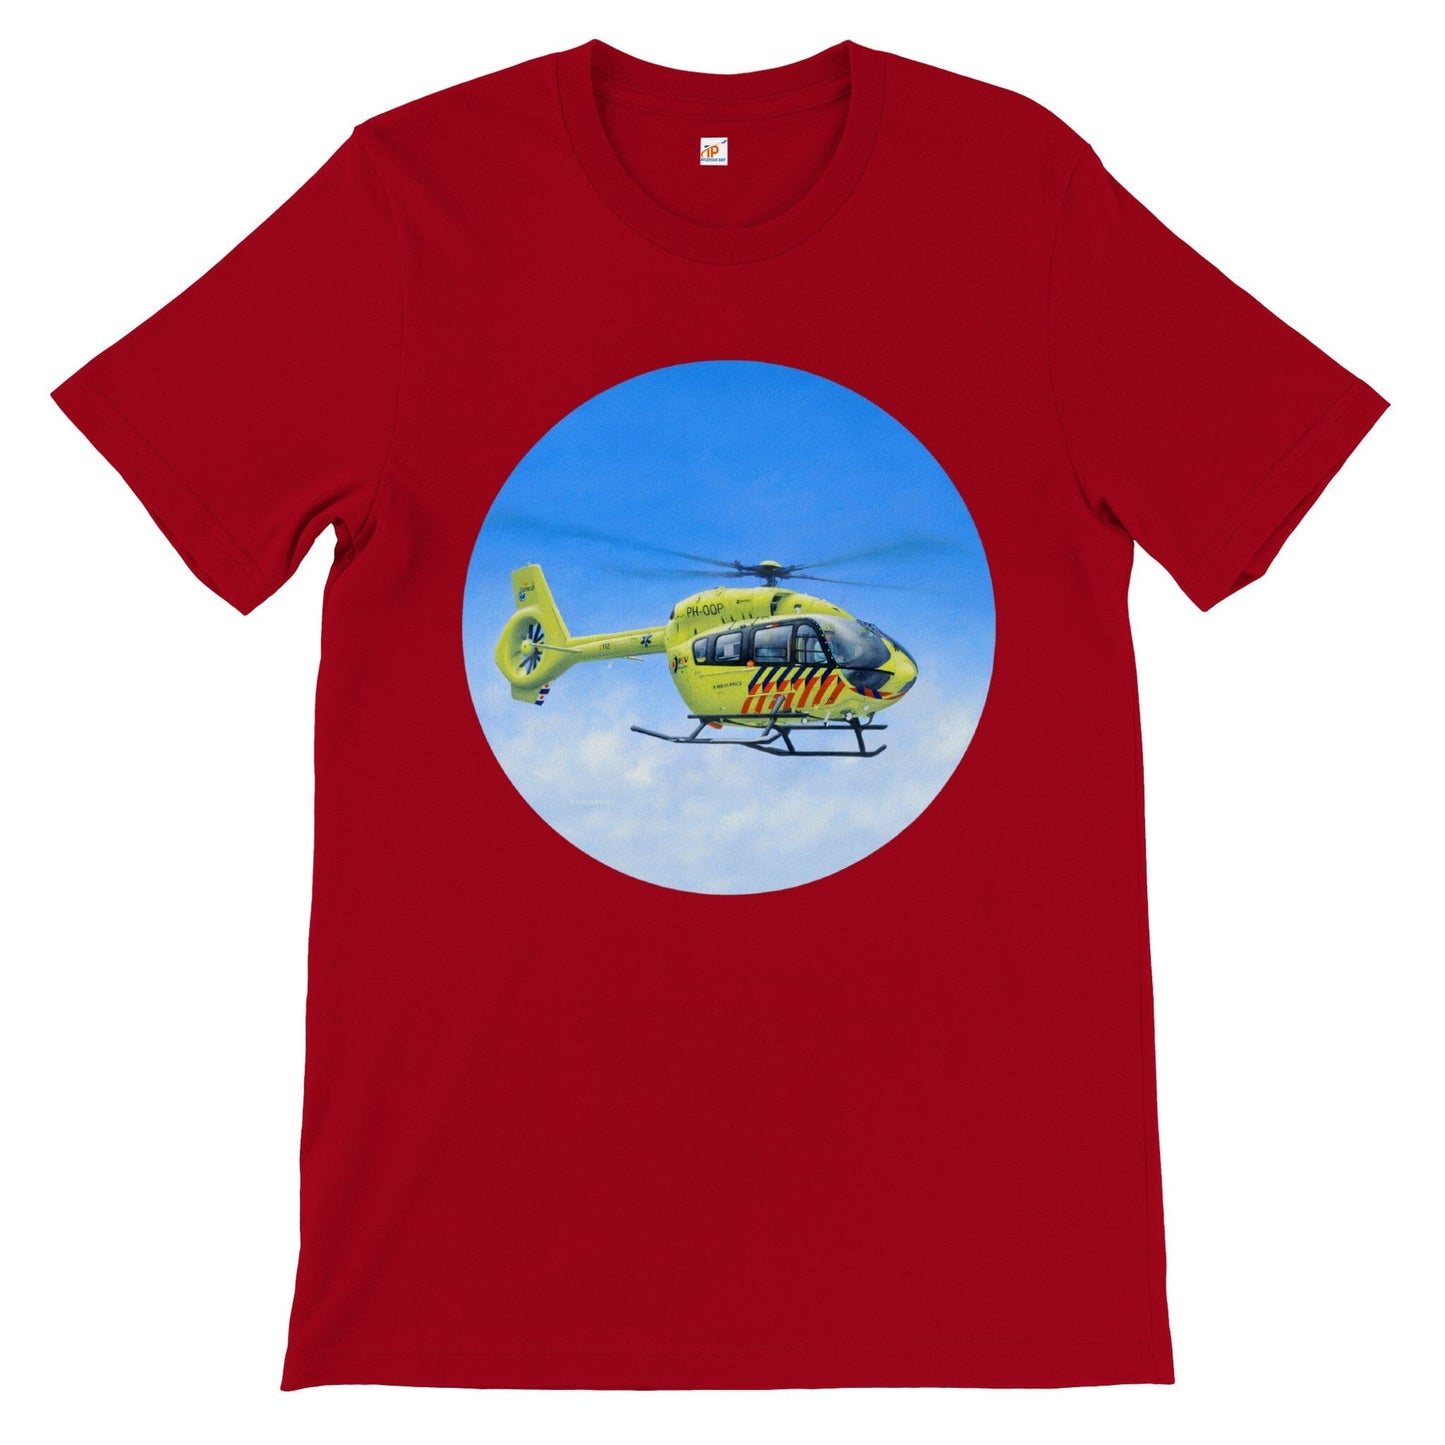 Peter Hoogenberg - T-shirt - Ambulance Helicopter Wadden Islands - Premium Unisex T-shirt TP Aviation Art Red S 